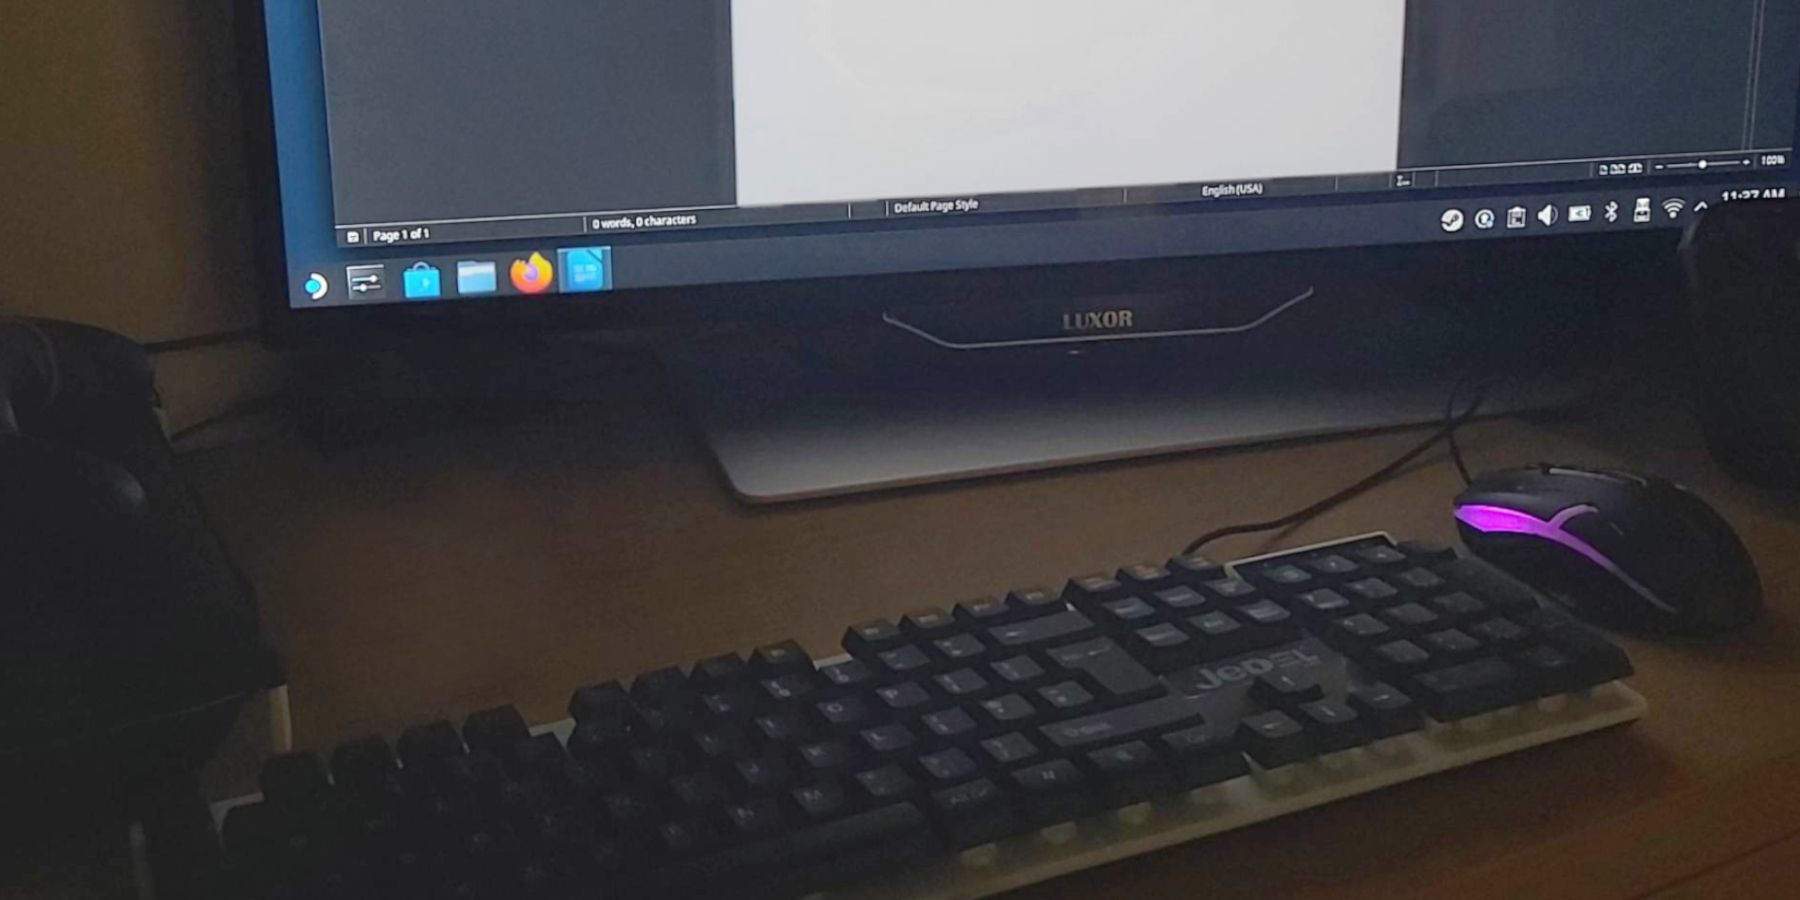 Steam Deck running as a PC on a desk